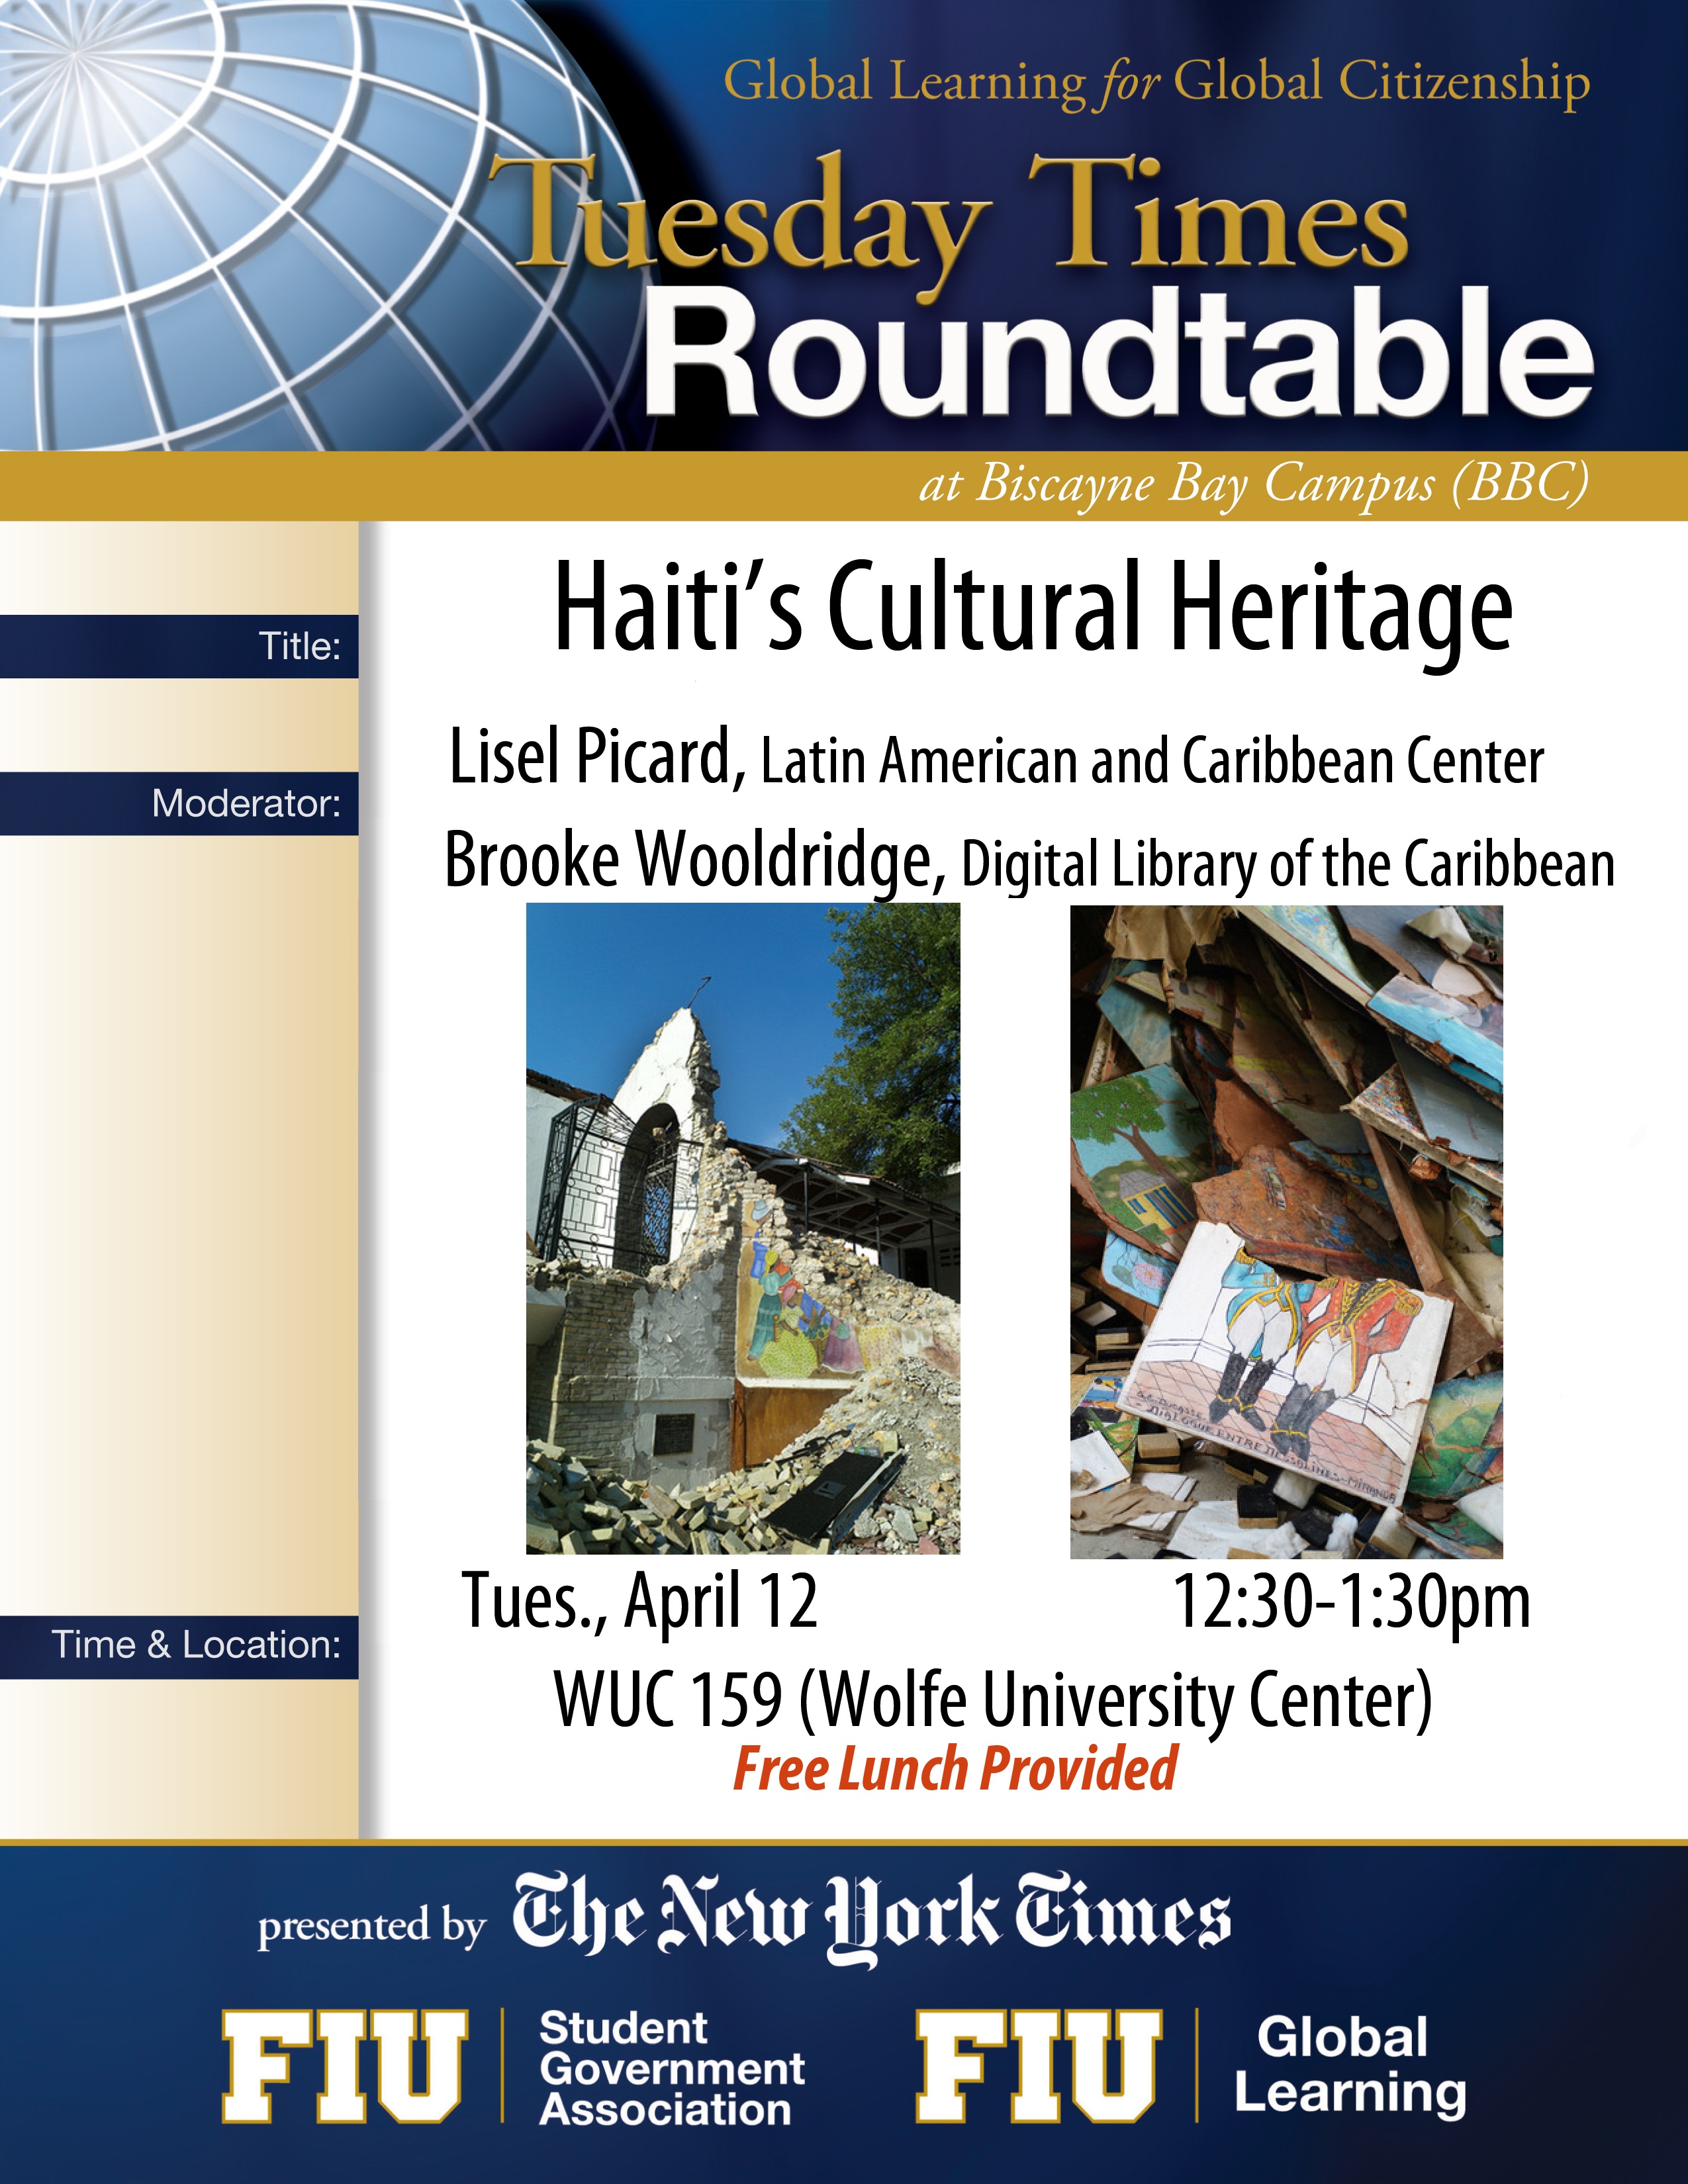 Haiti's Cultural Heritage Roundtable at FIU